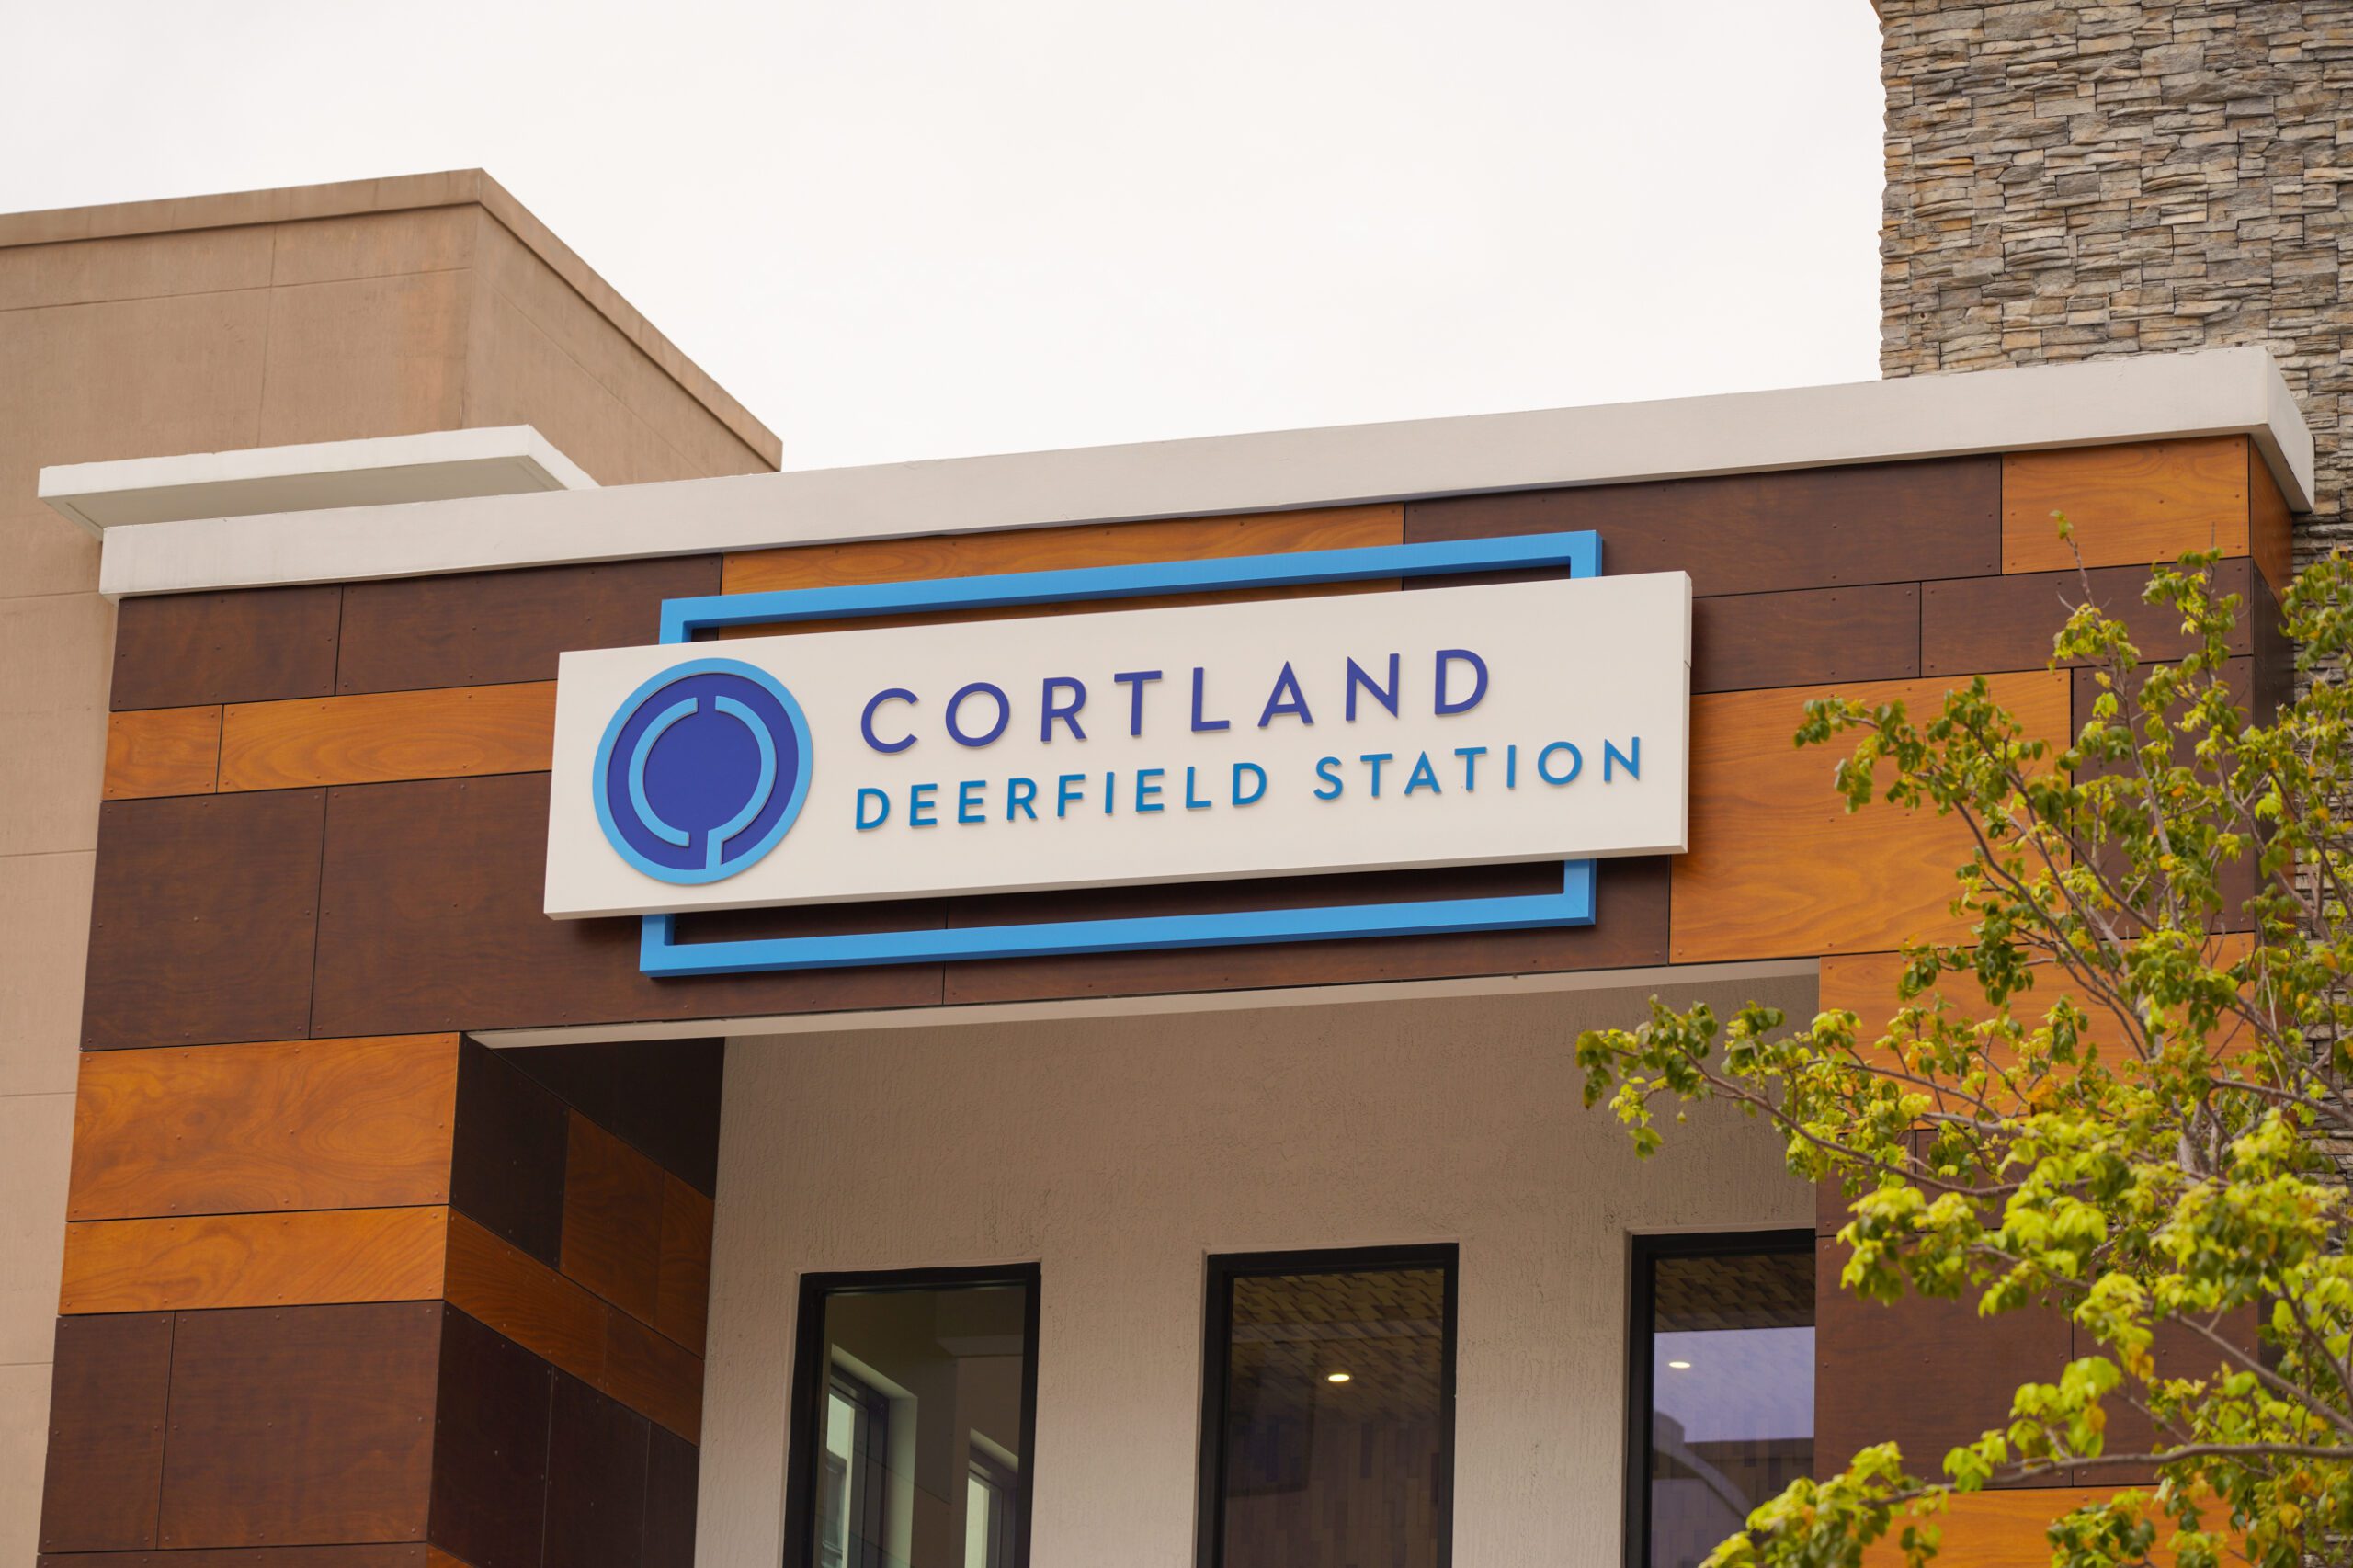 Cortland Deerfield Station